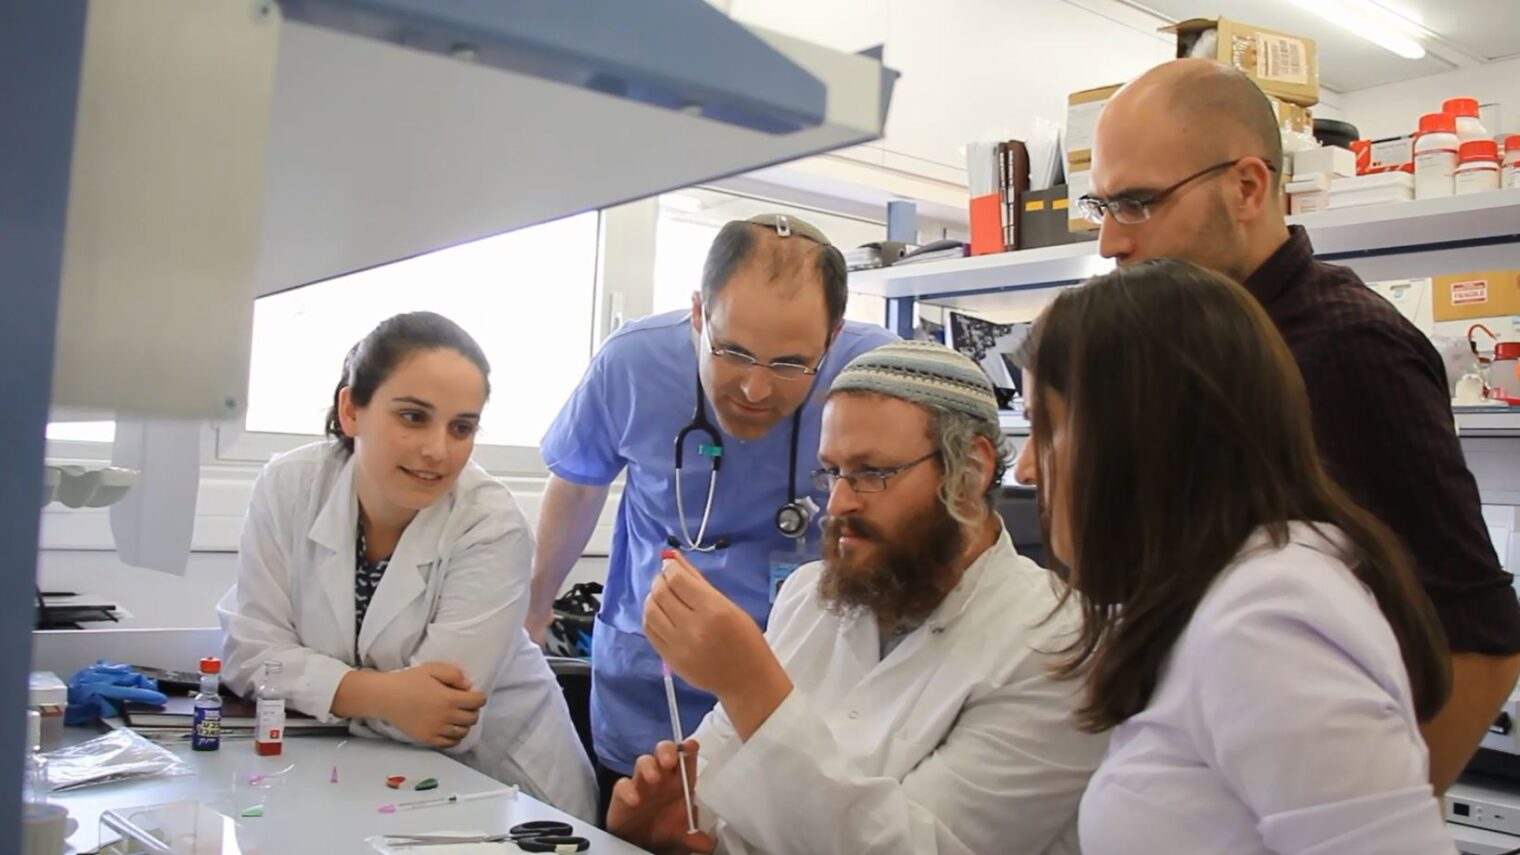 The BioDesign group that developed UCap, from left, Nitzan Guberman, Dr. Amir Orlev, Eliezer Keinan, Itay Monnickendam and Simi Hinden. Photo courtesy of Multimedia-The Hebrew University of Jerusalem